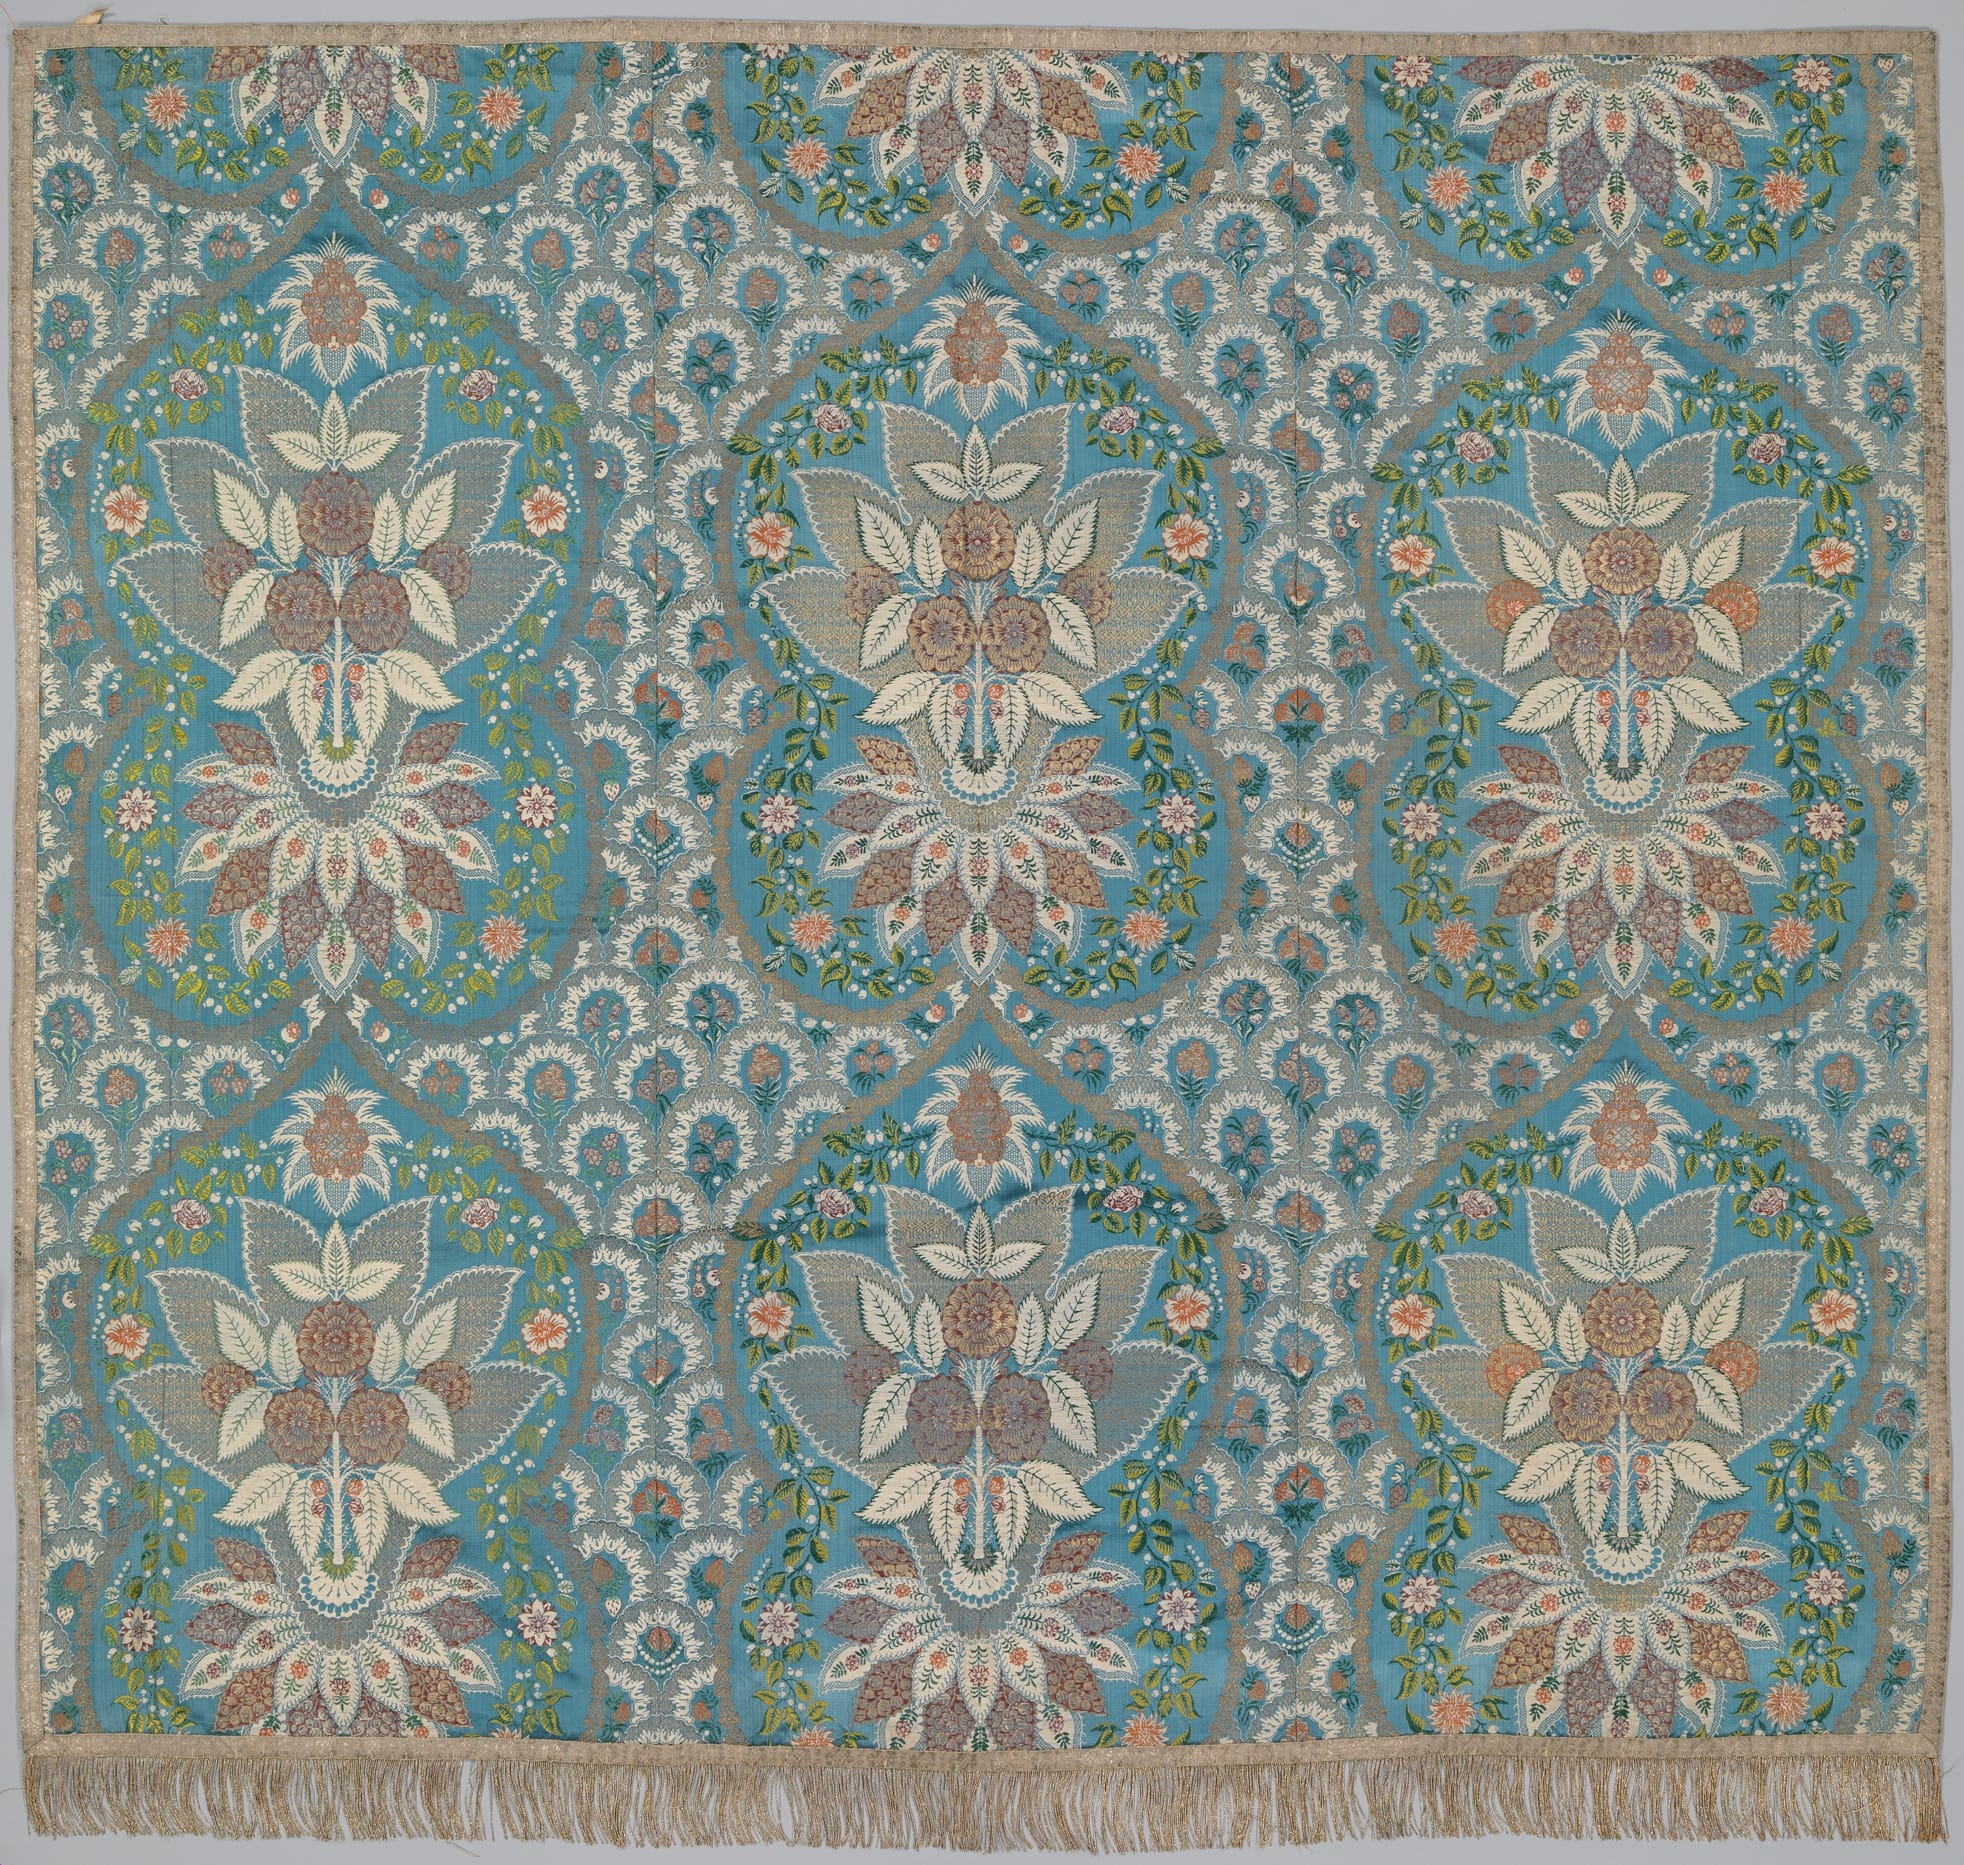 Textile design. Fabric in Louis-quatorze style. 17th century.